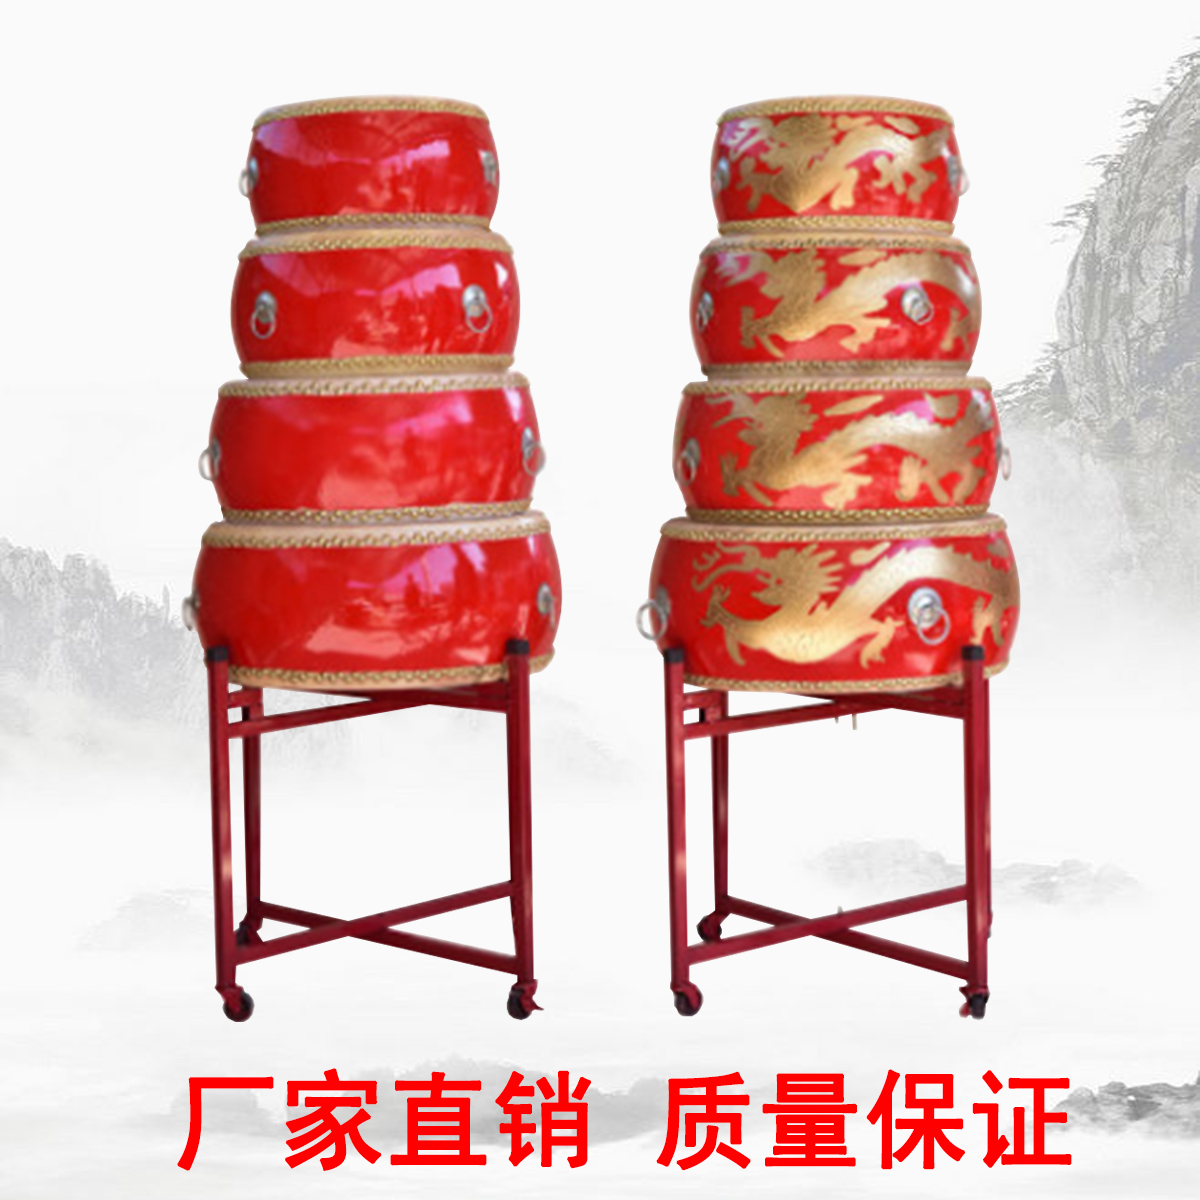 Bull Peel Drum Great Drum Dragon Drum Weifeng Gong Drums China Red Adult Children's Performance Pan Drum Flat Drum Hall Drum